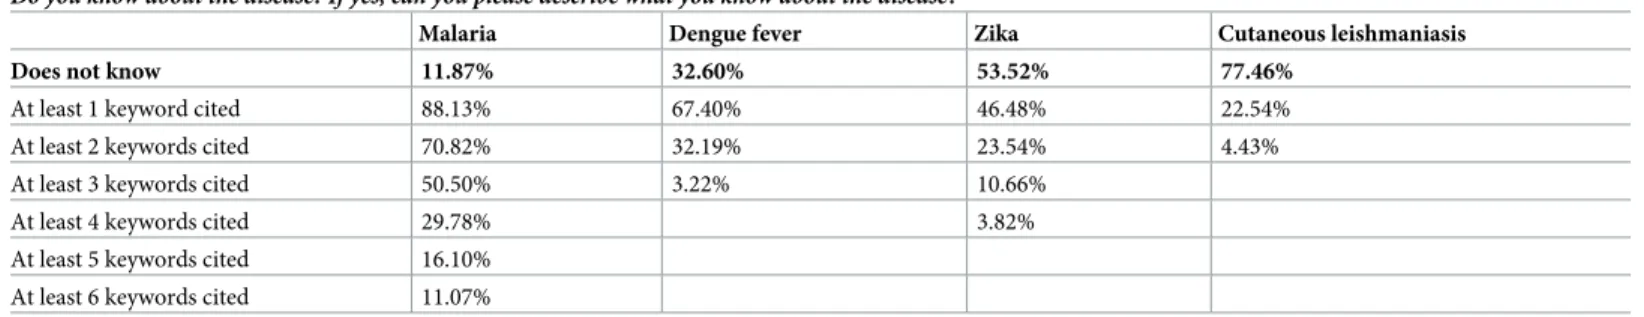 Table 2. Knowledge level per disease.